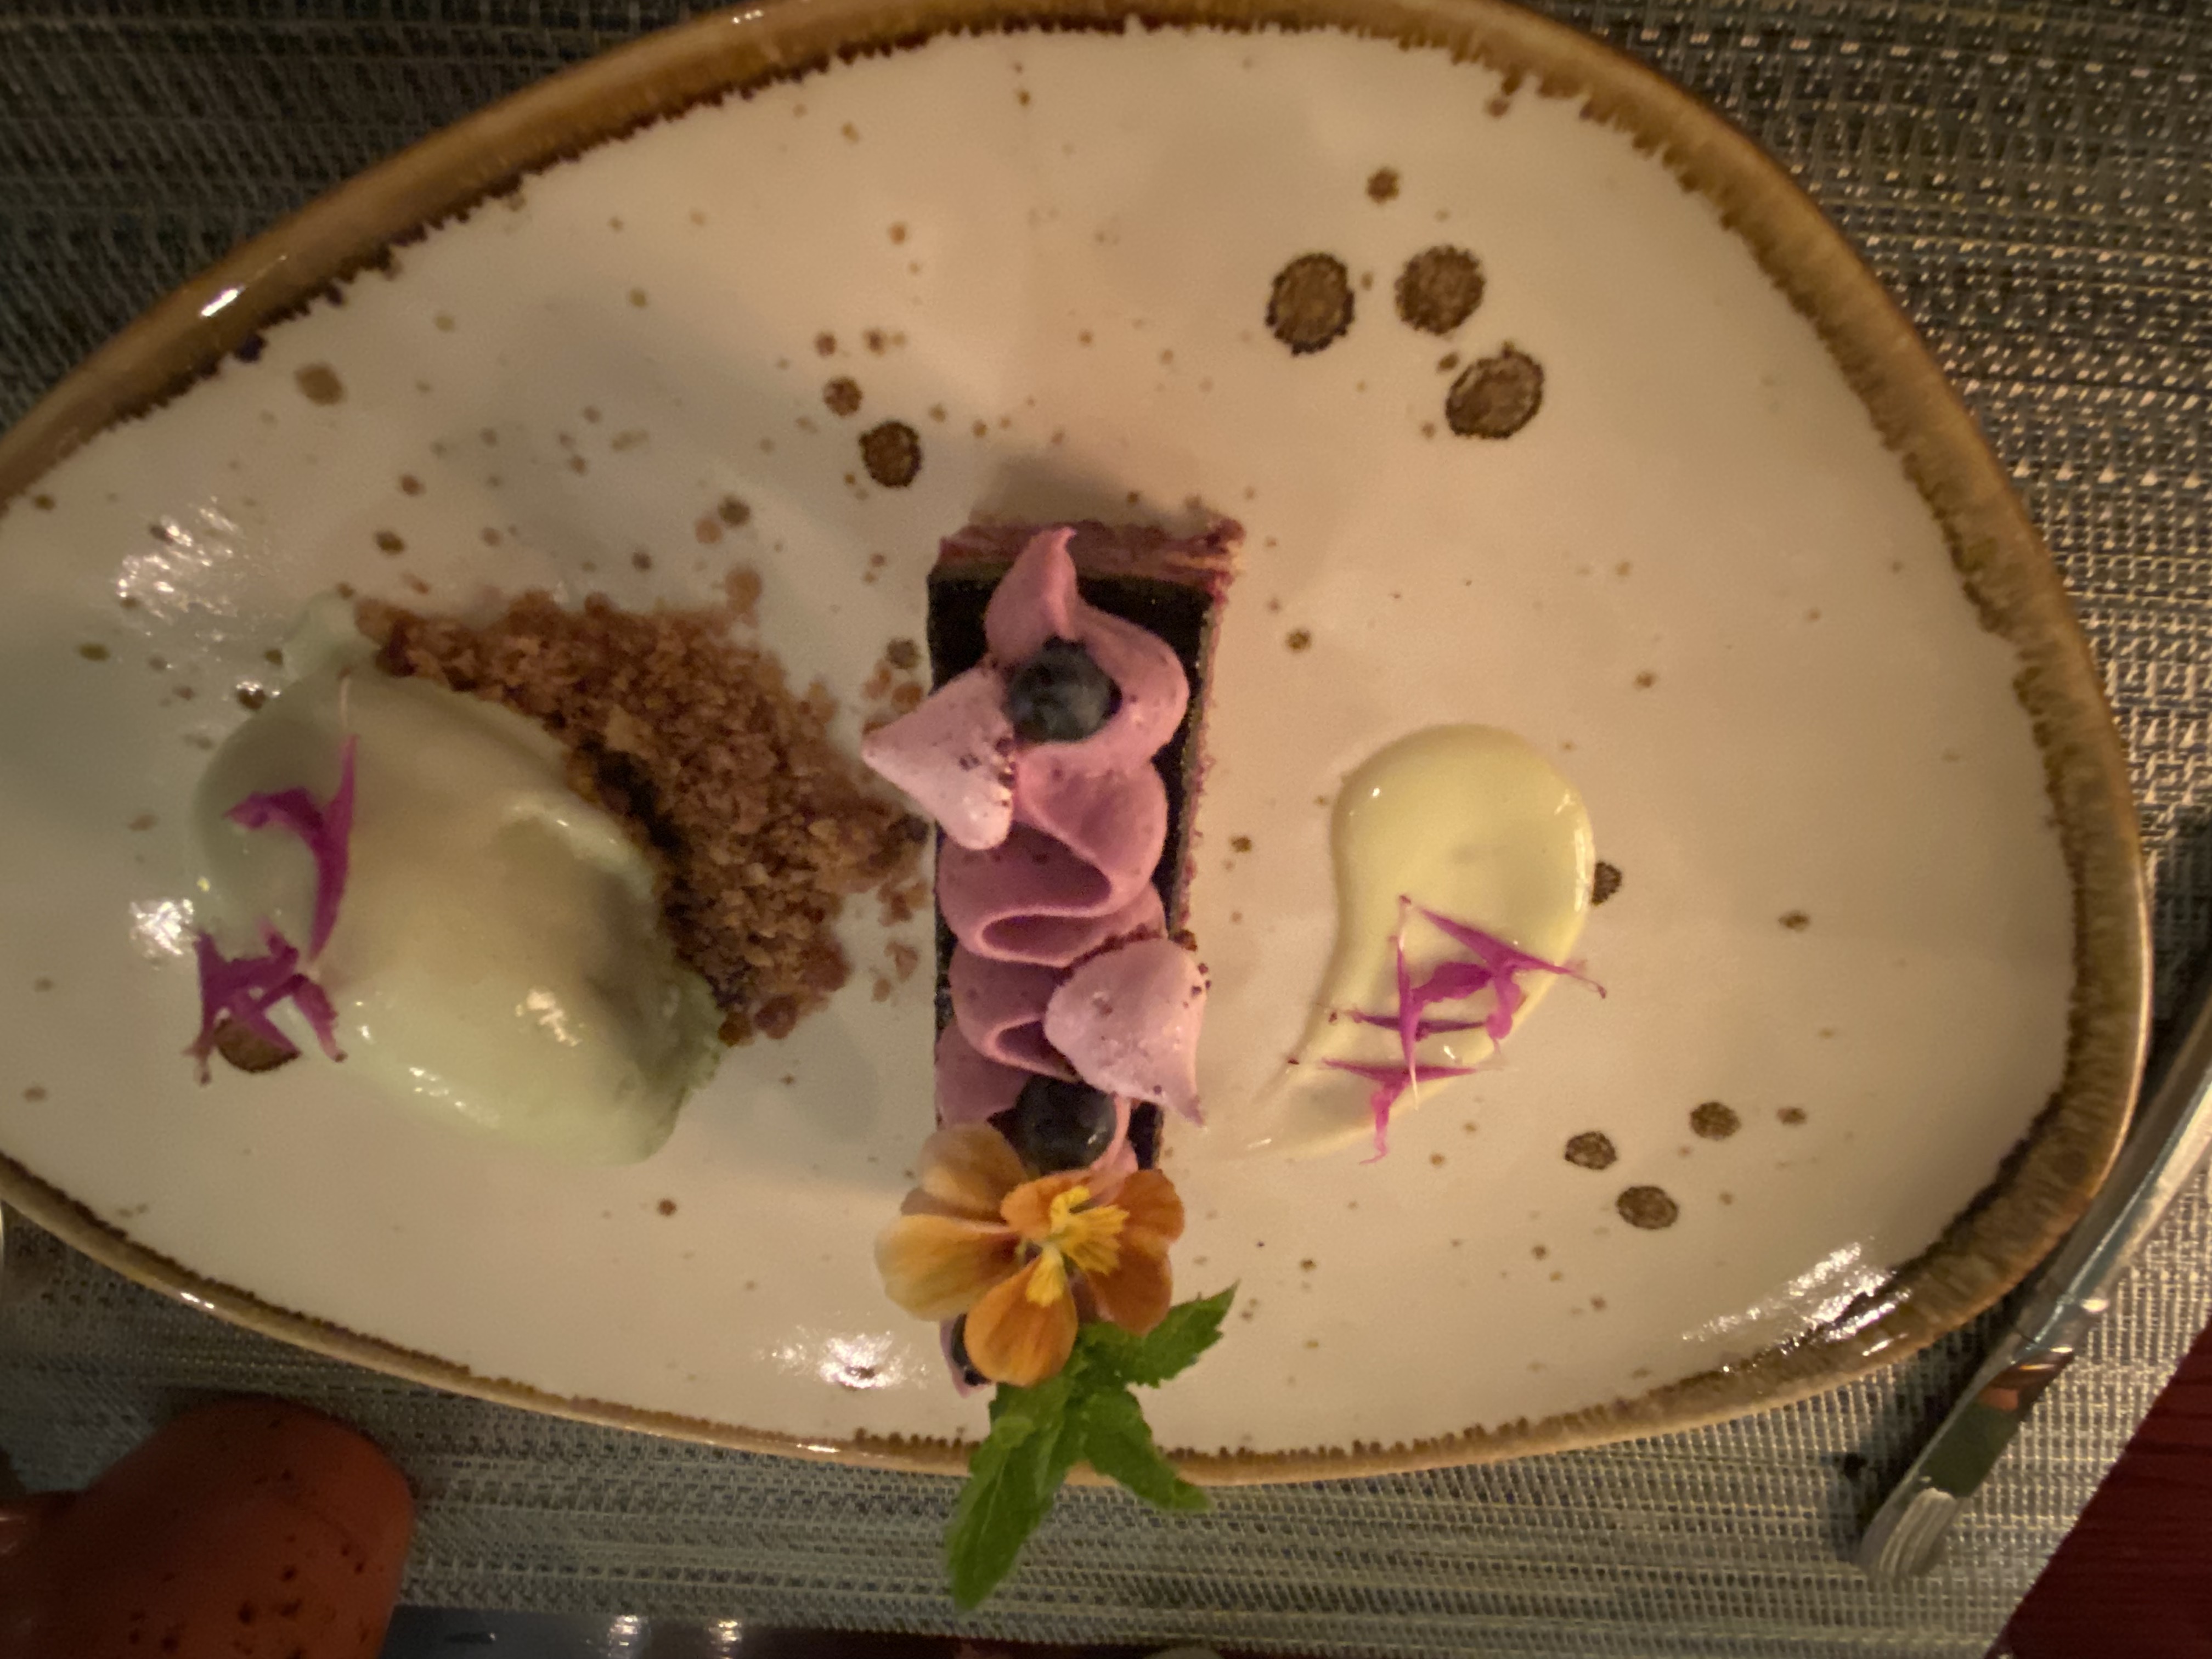 Artfully arranged desserts